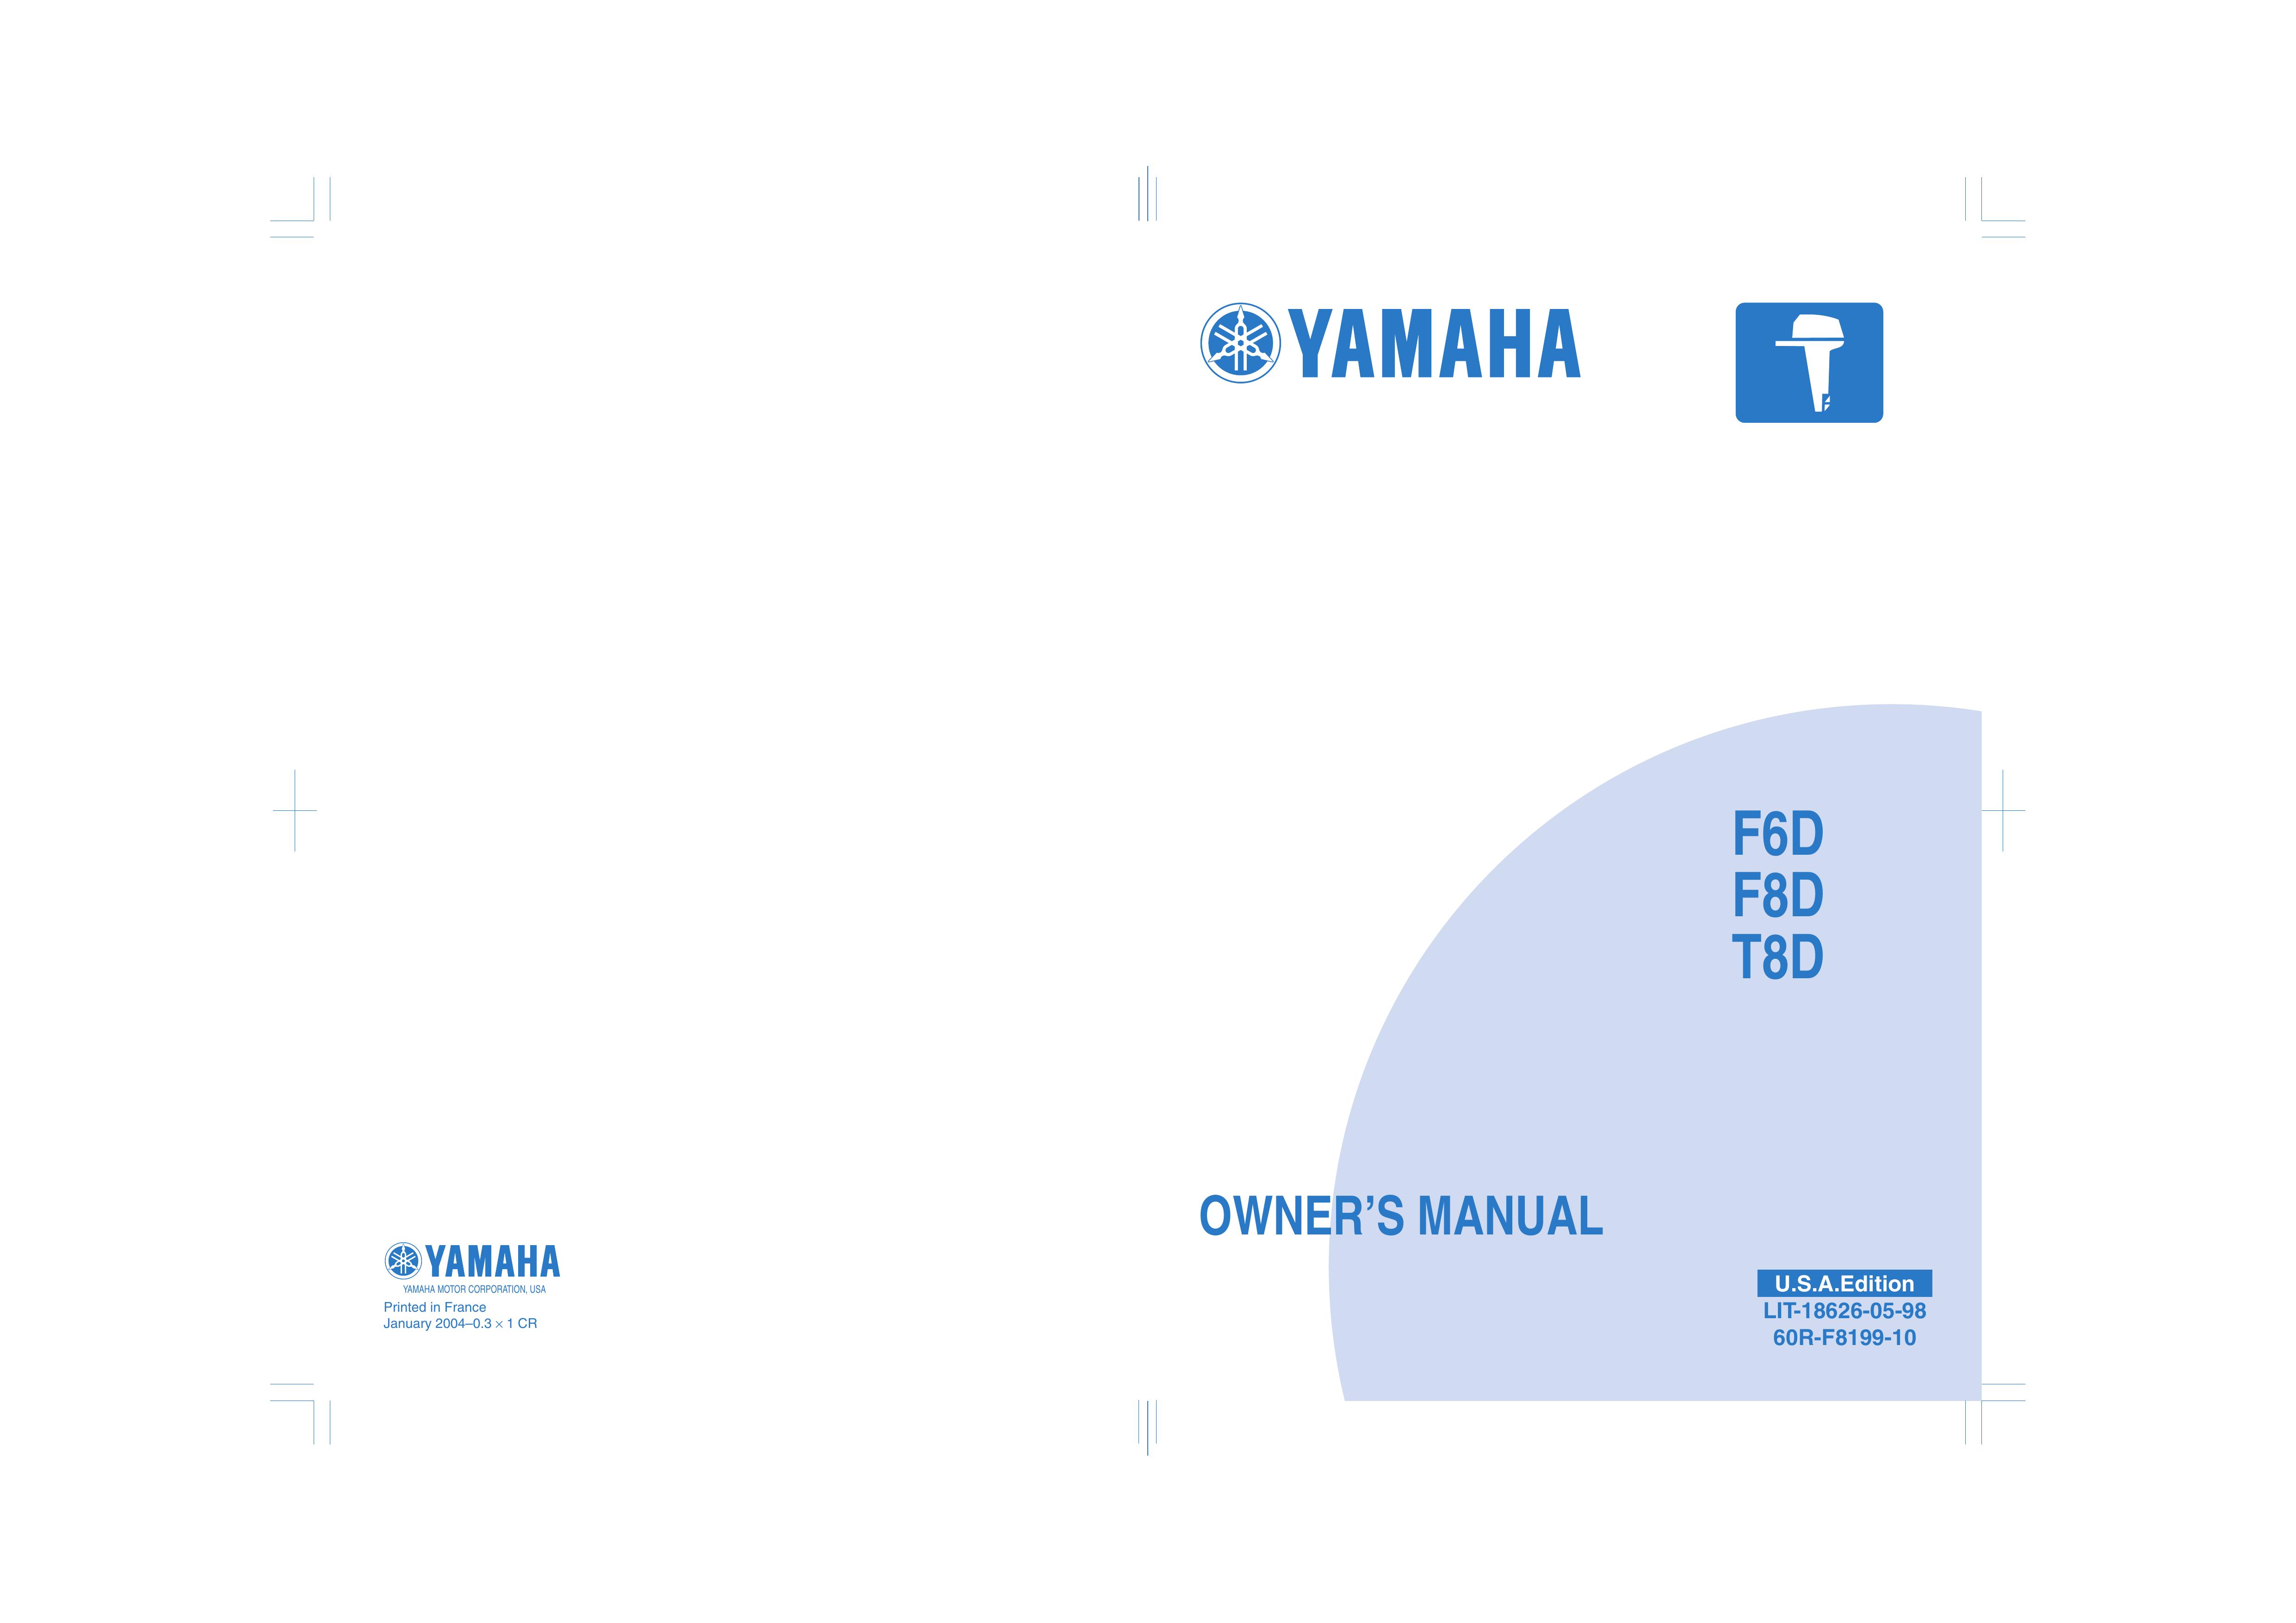 Yamaha f6D Outboard Motor User Manual